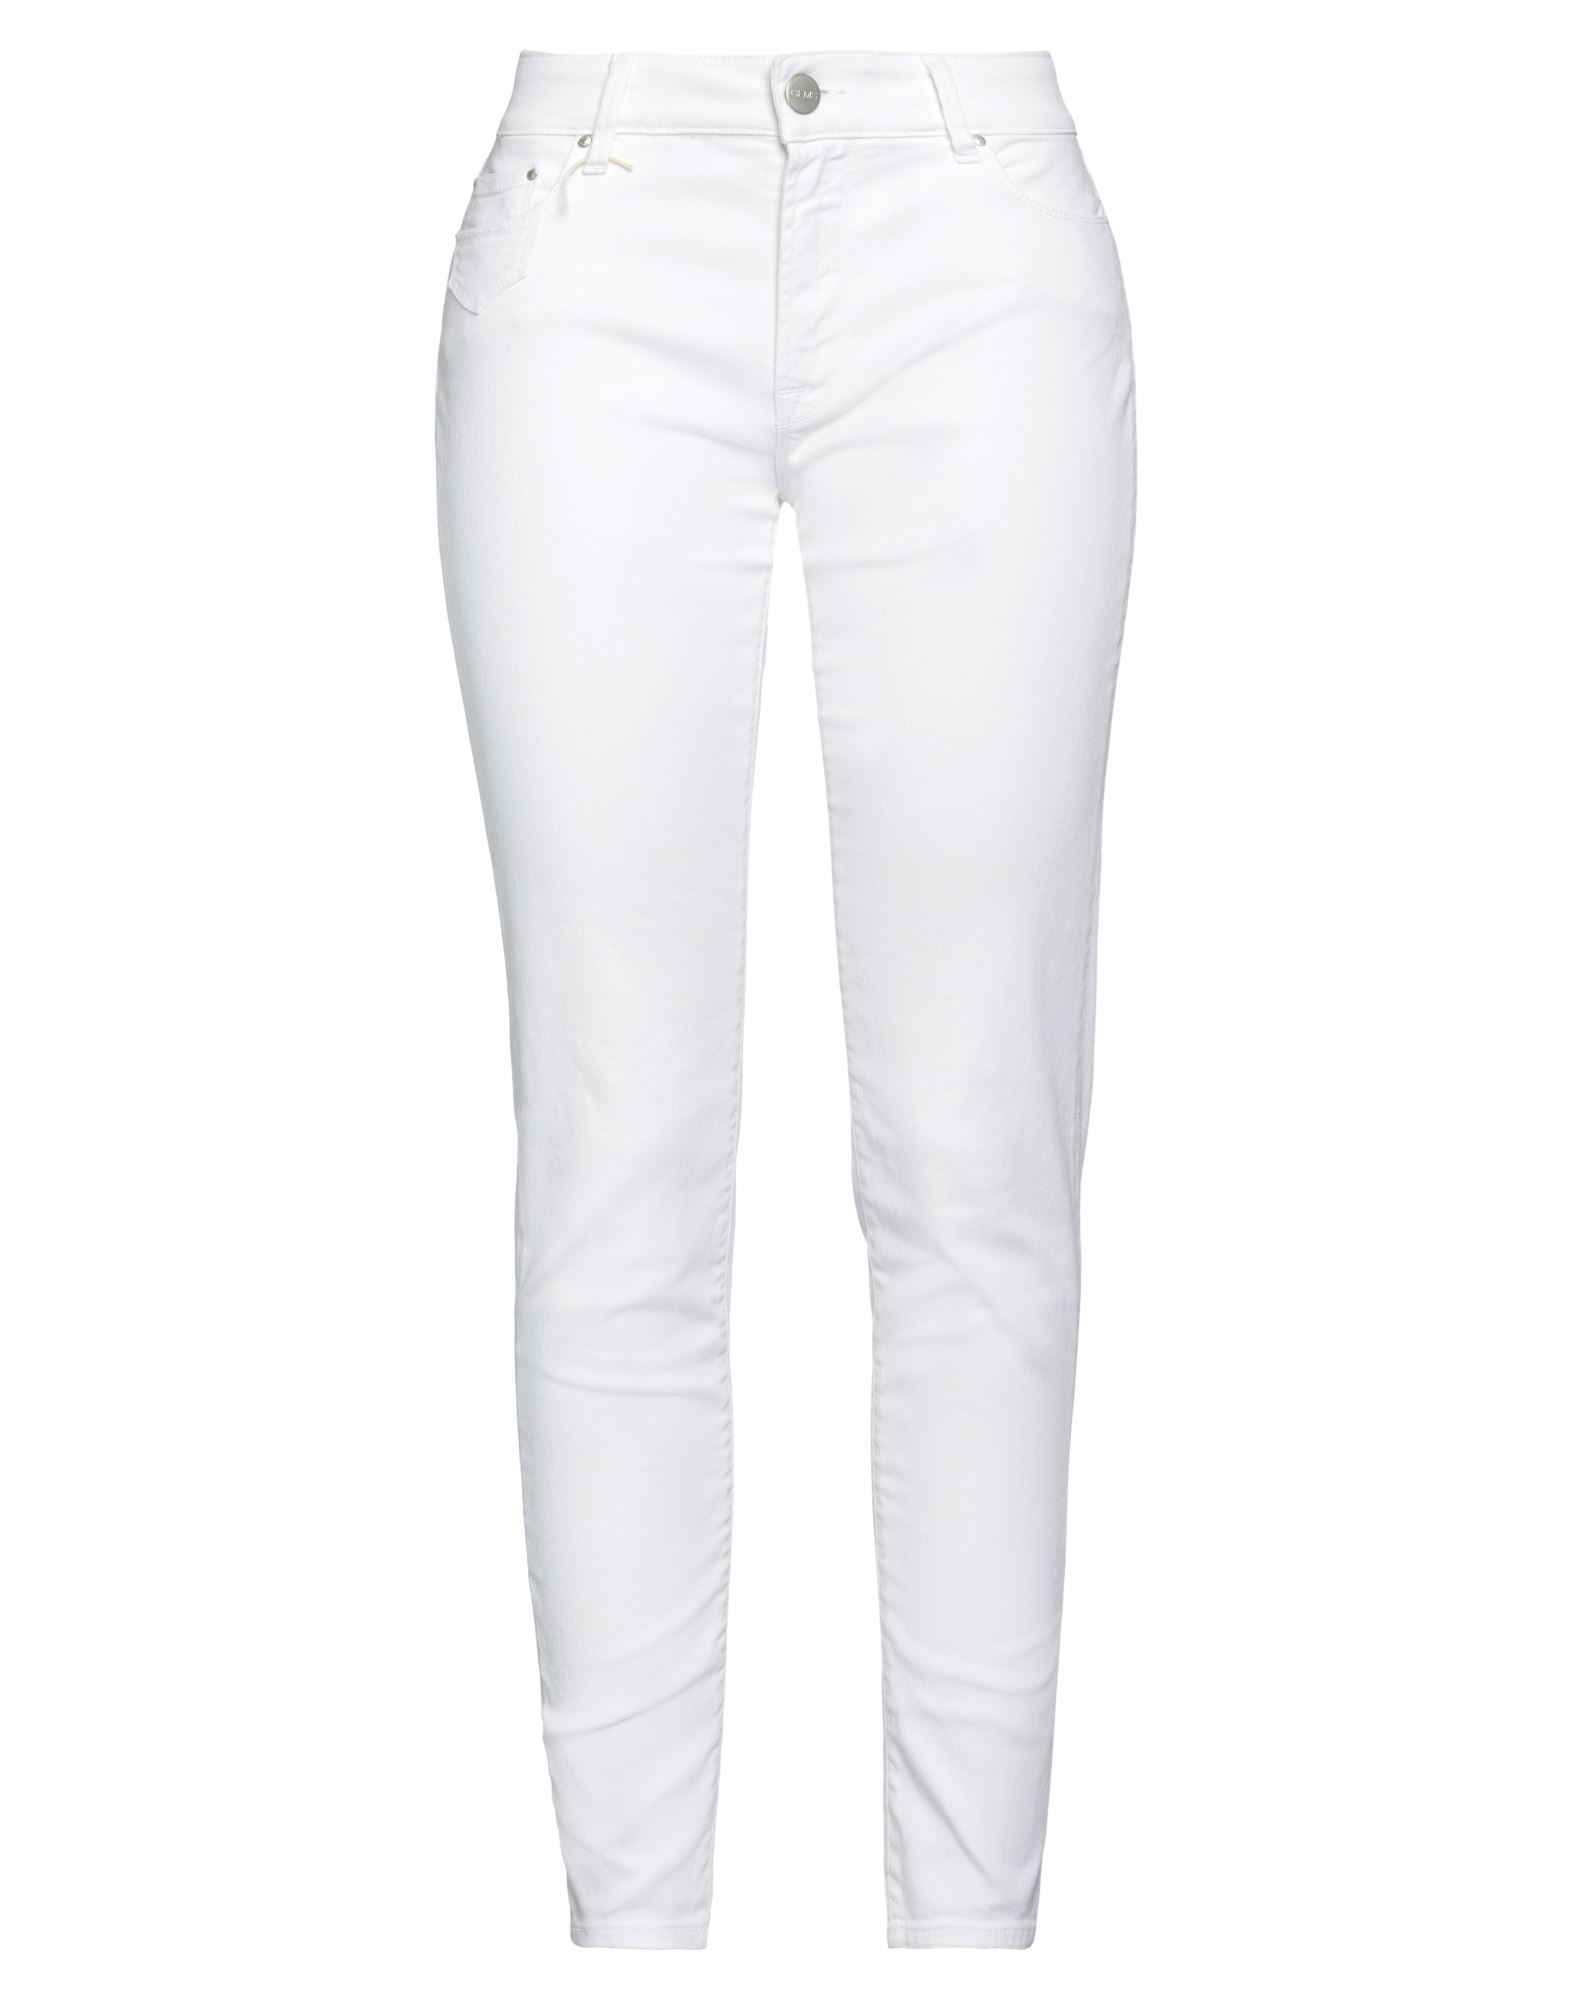 Gem's Jeans In White